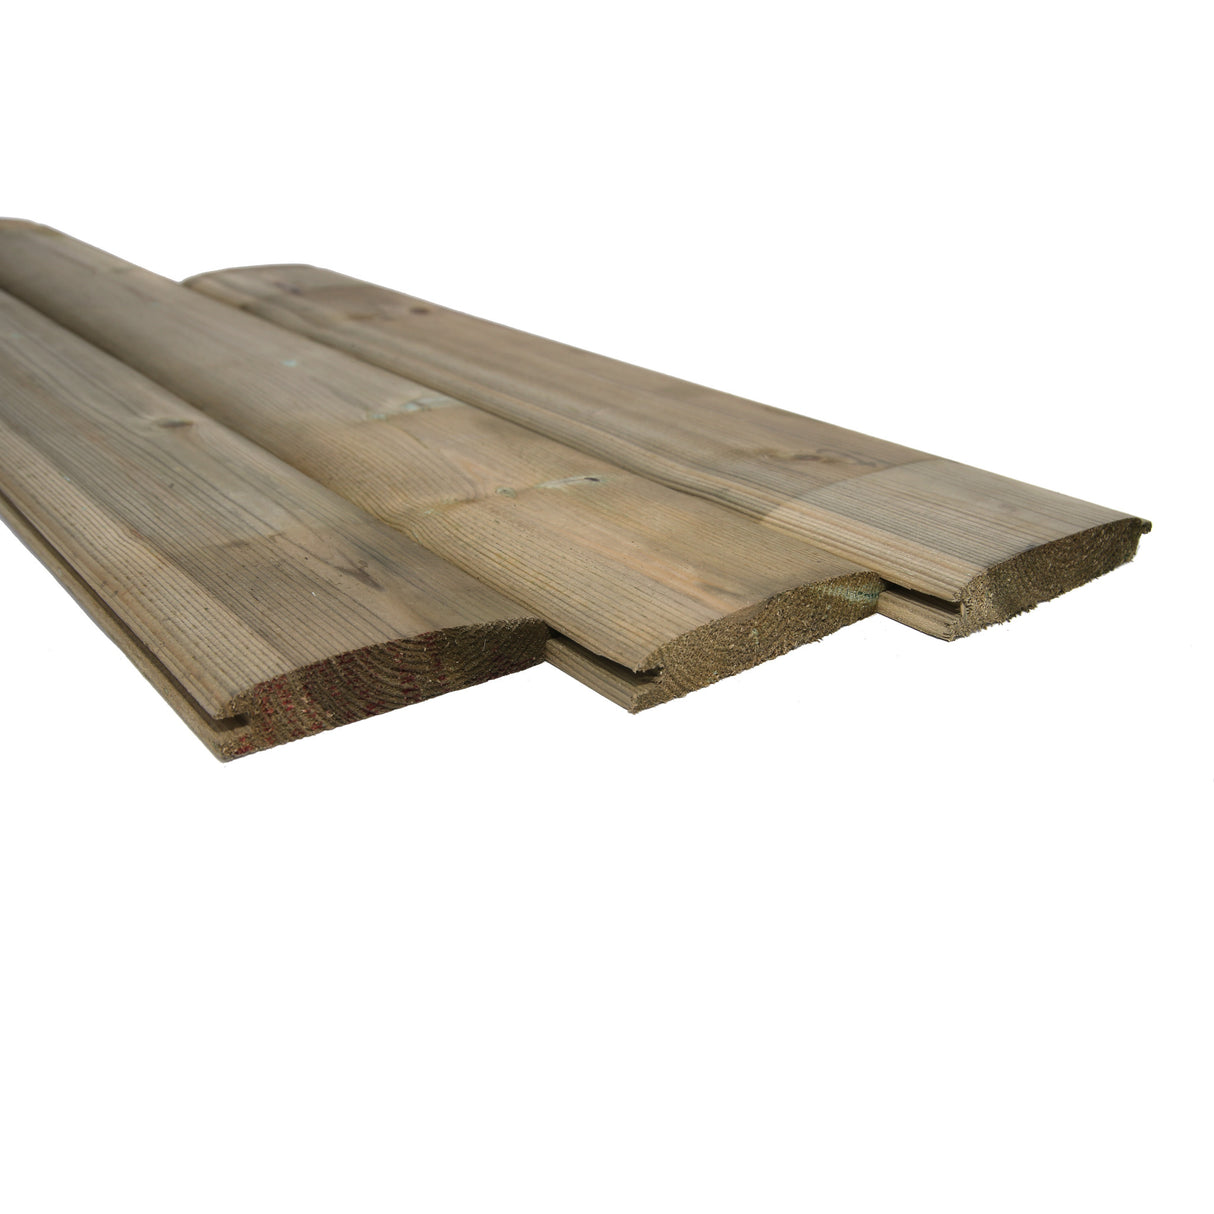 Tanalised LogLap Timber Cladding - 21mm x 88mm (3.5") Finished Size (6954570743987)